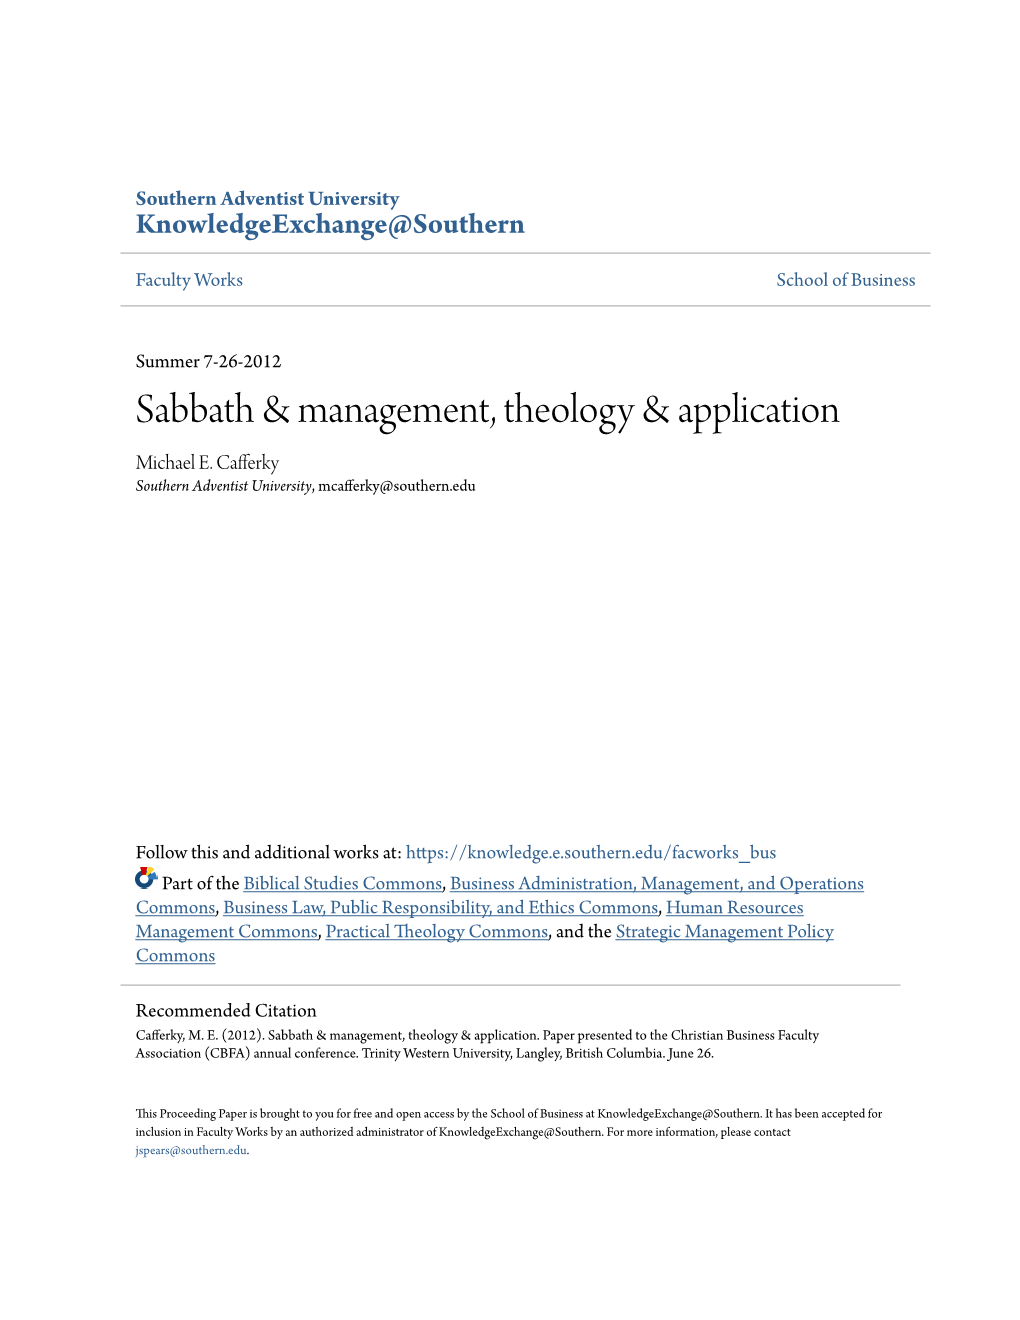 Sabbath & Management, Theology & Application